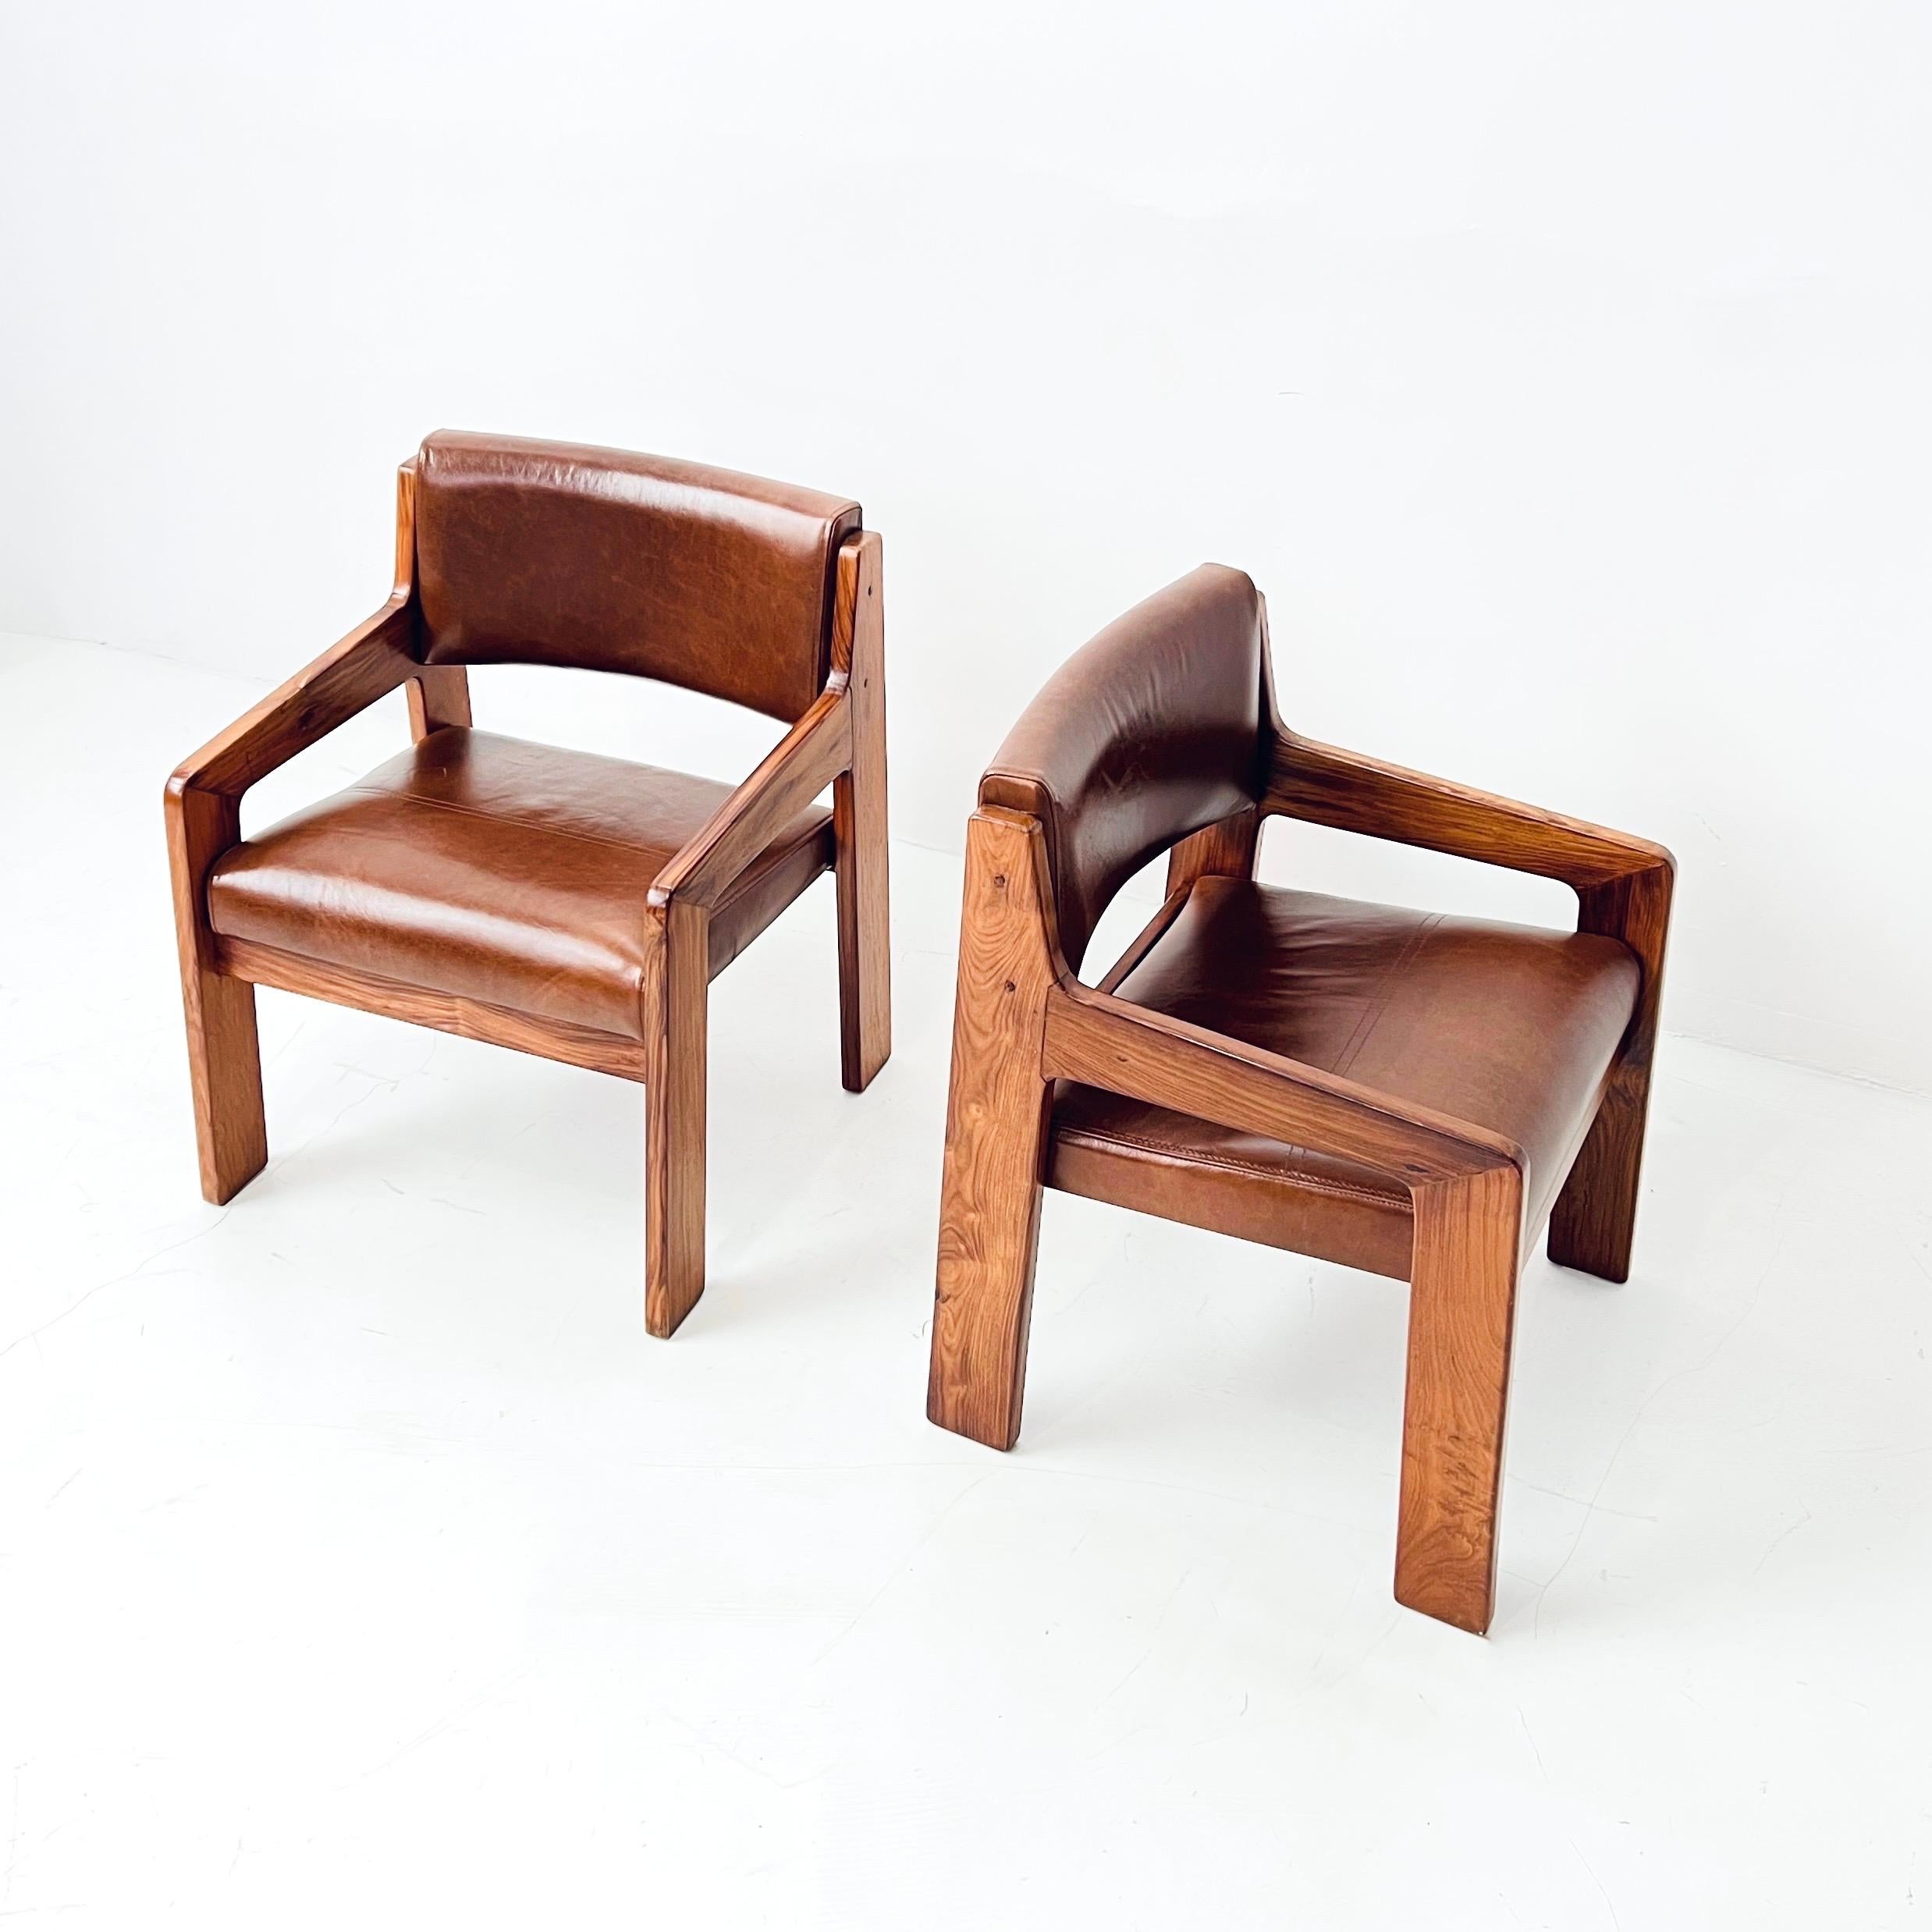 Leather Jorge Zalszupin Caviuna Arm Chairs from 'Hotel Nacional' in Rio de Janeiro